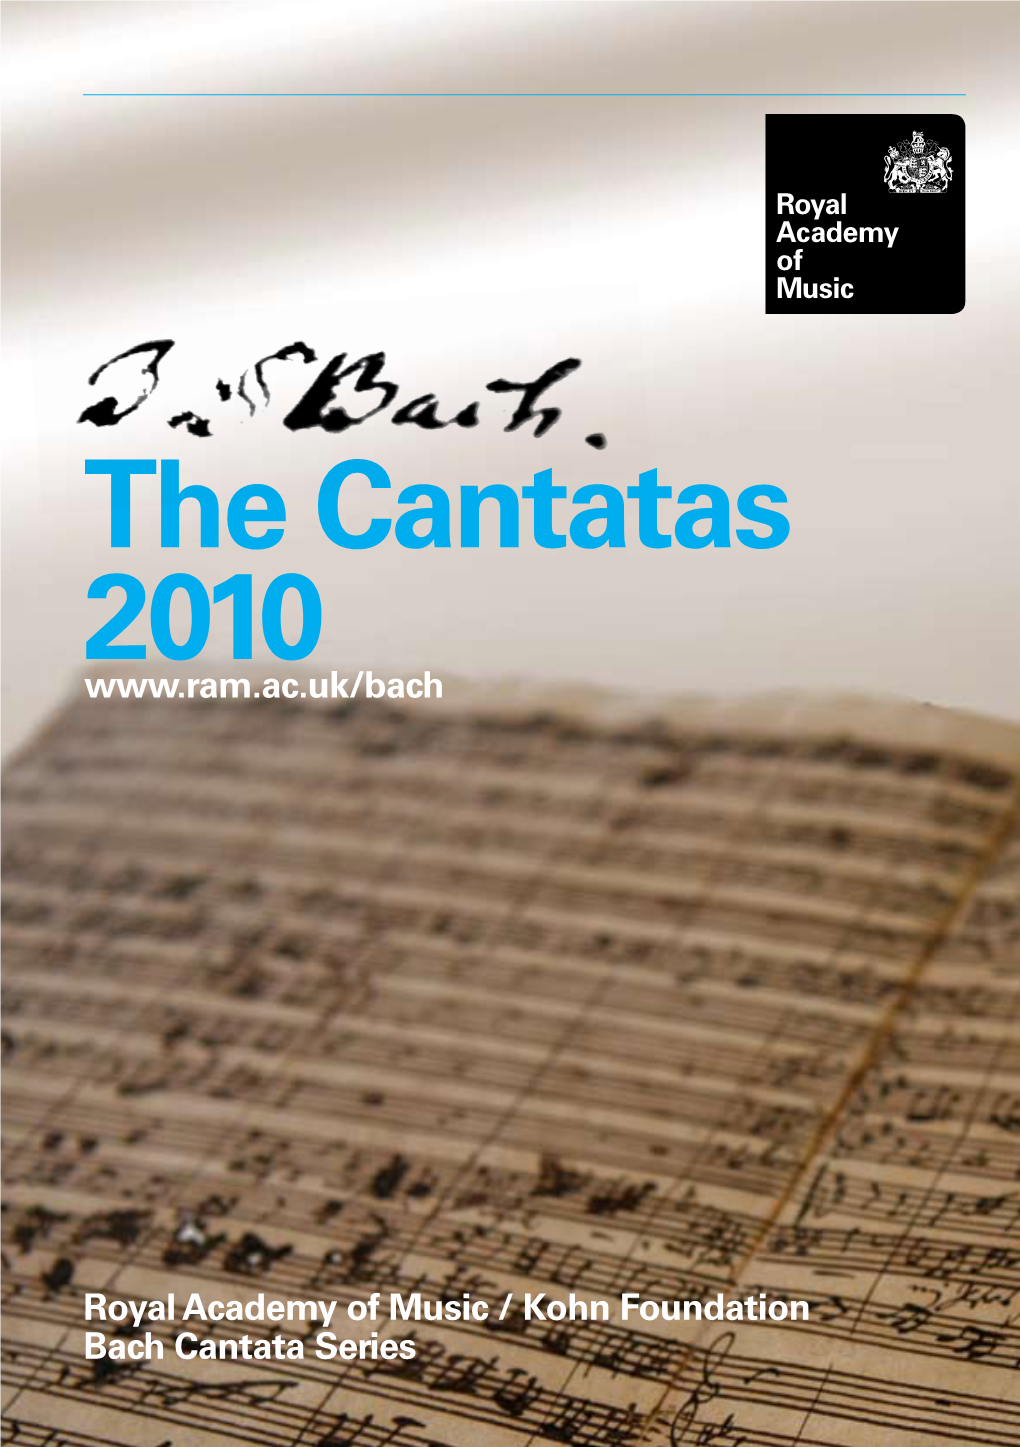 The Cantatas 2010